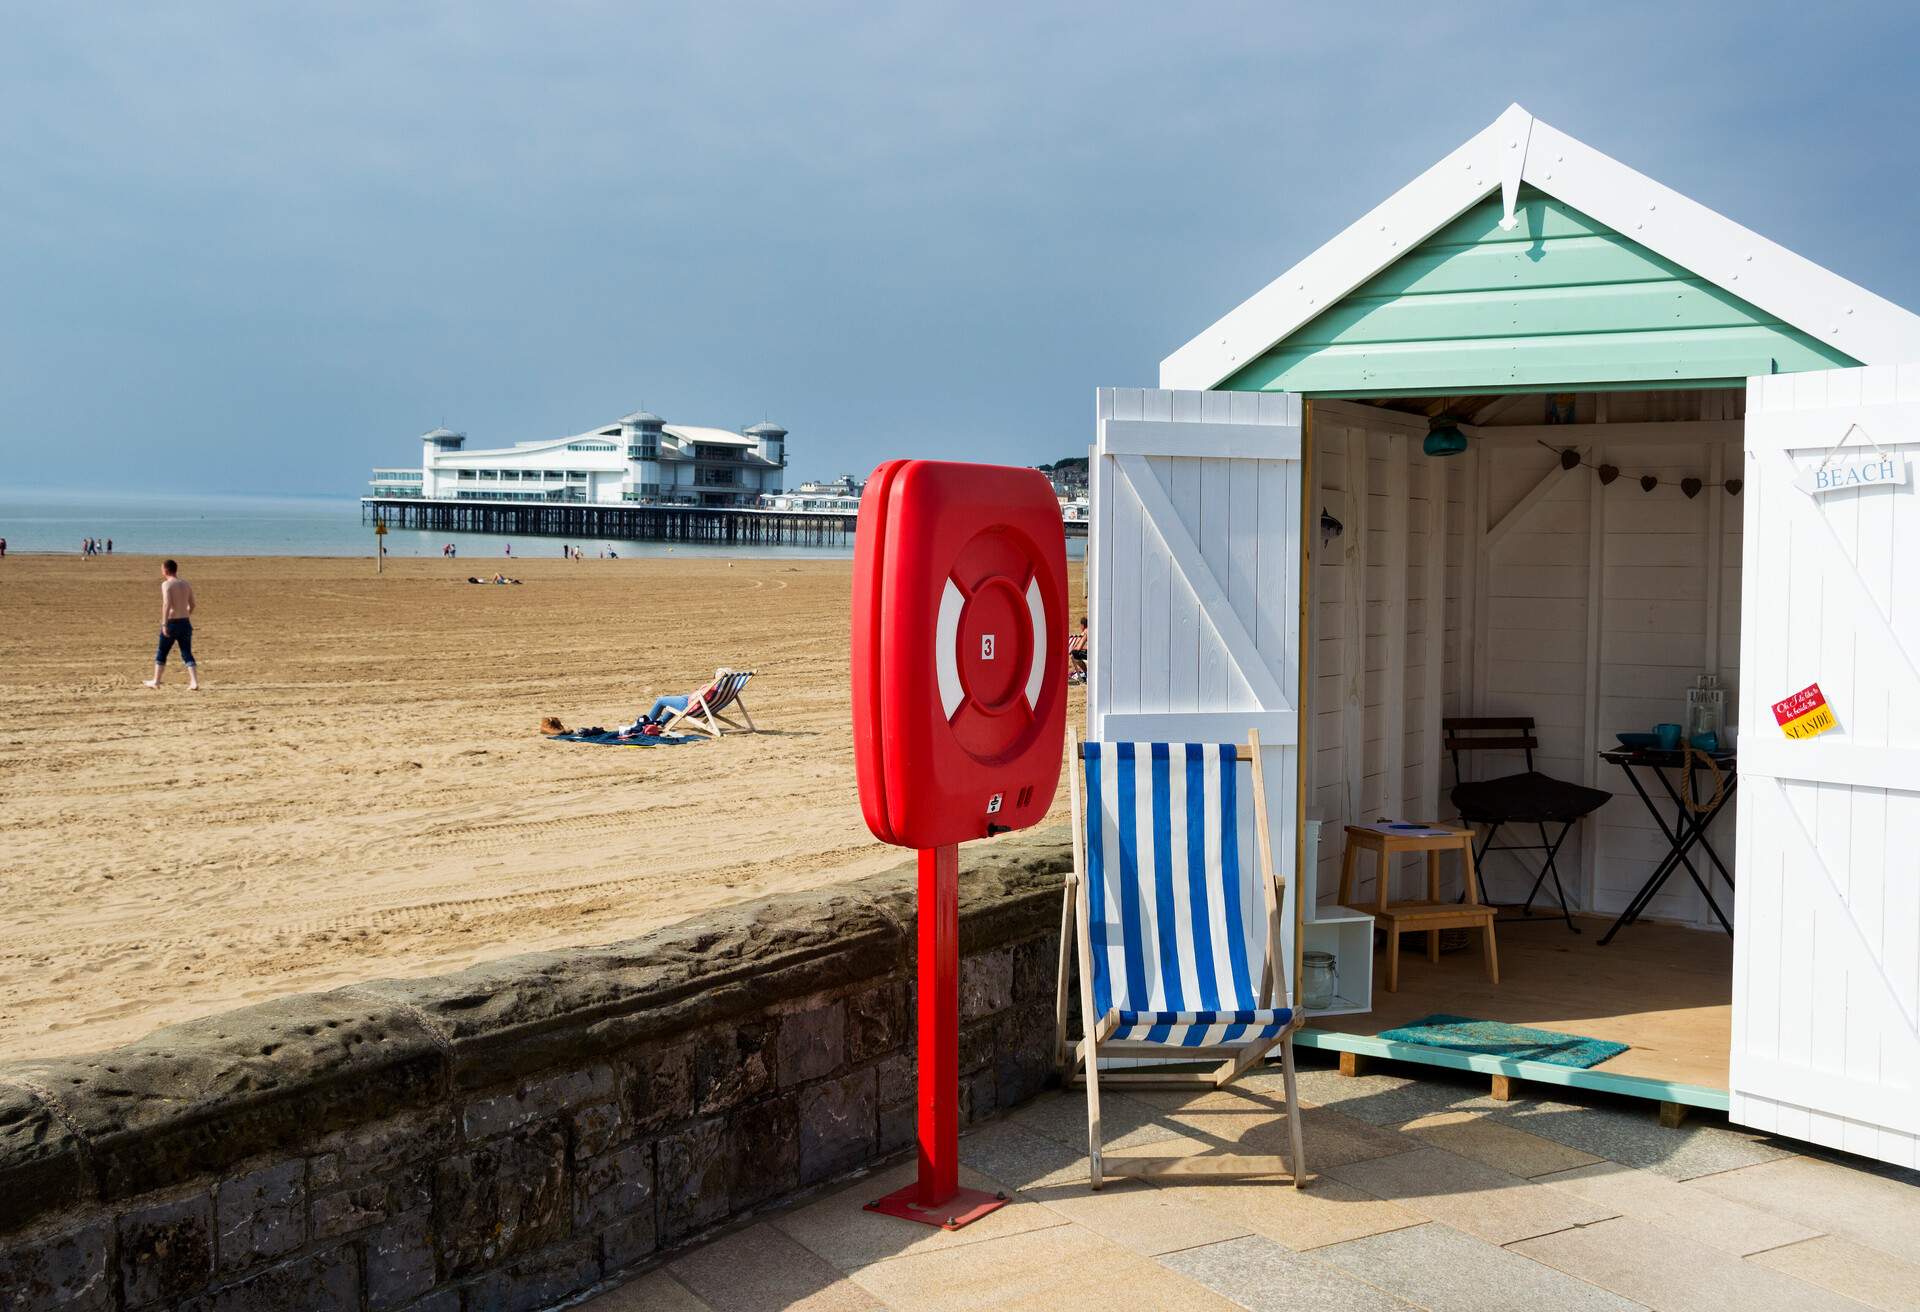 A little beach hut on the promenade of Weston-Super-Mare beach